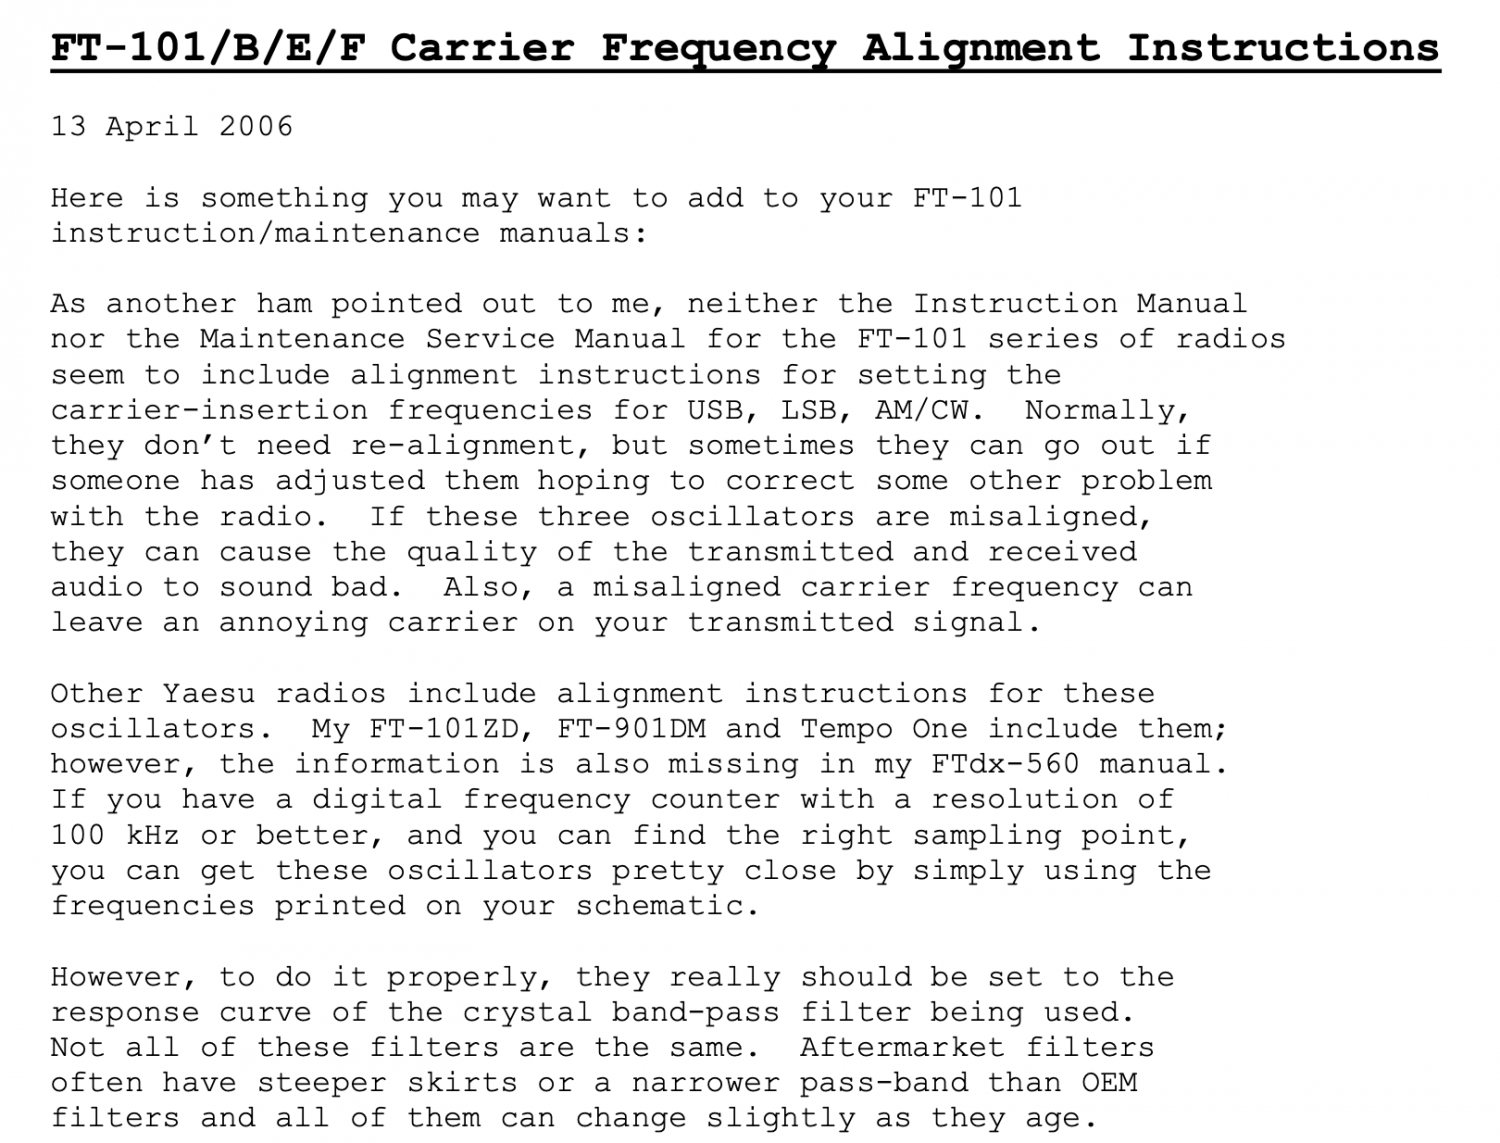 Yaesu FT-101 - Carrier Frequency Alignment (By John Kiljan N0BUP)